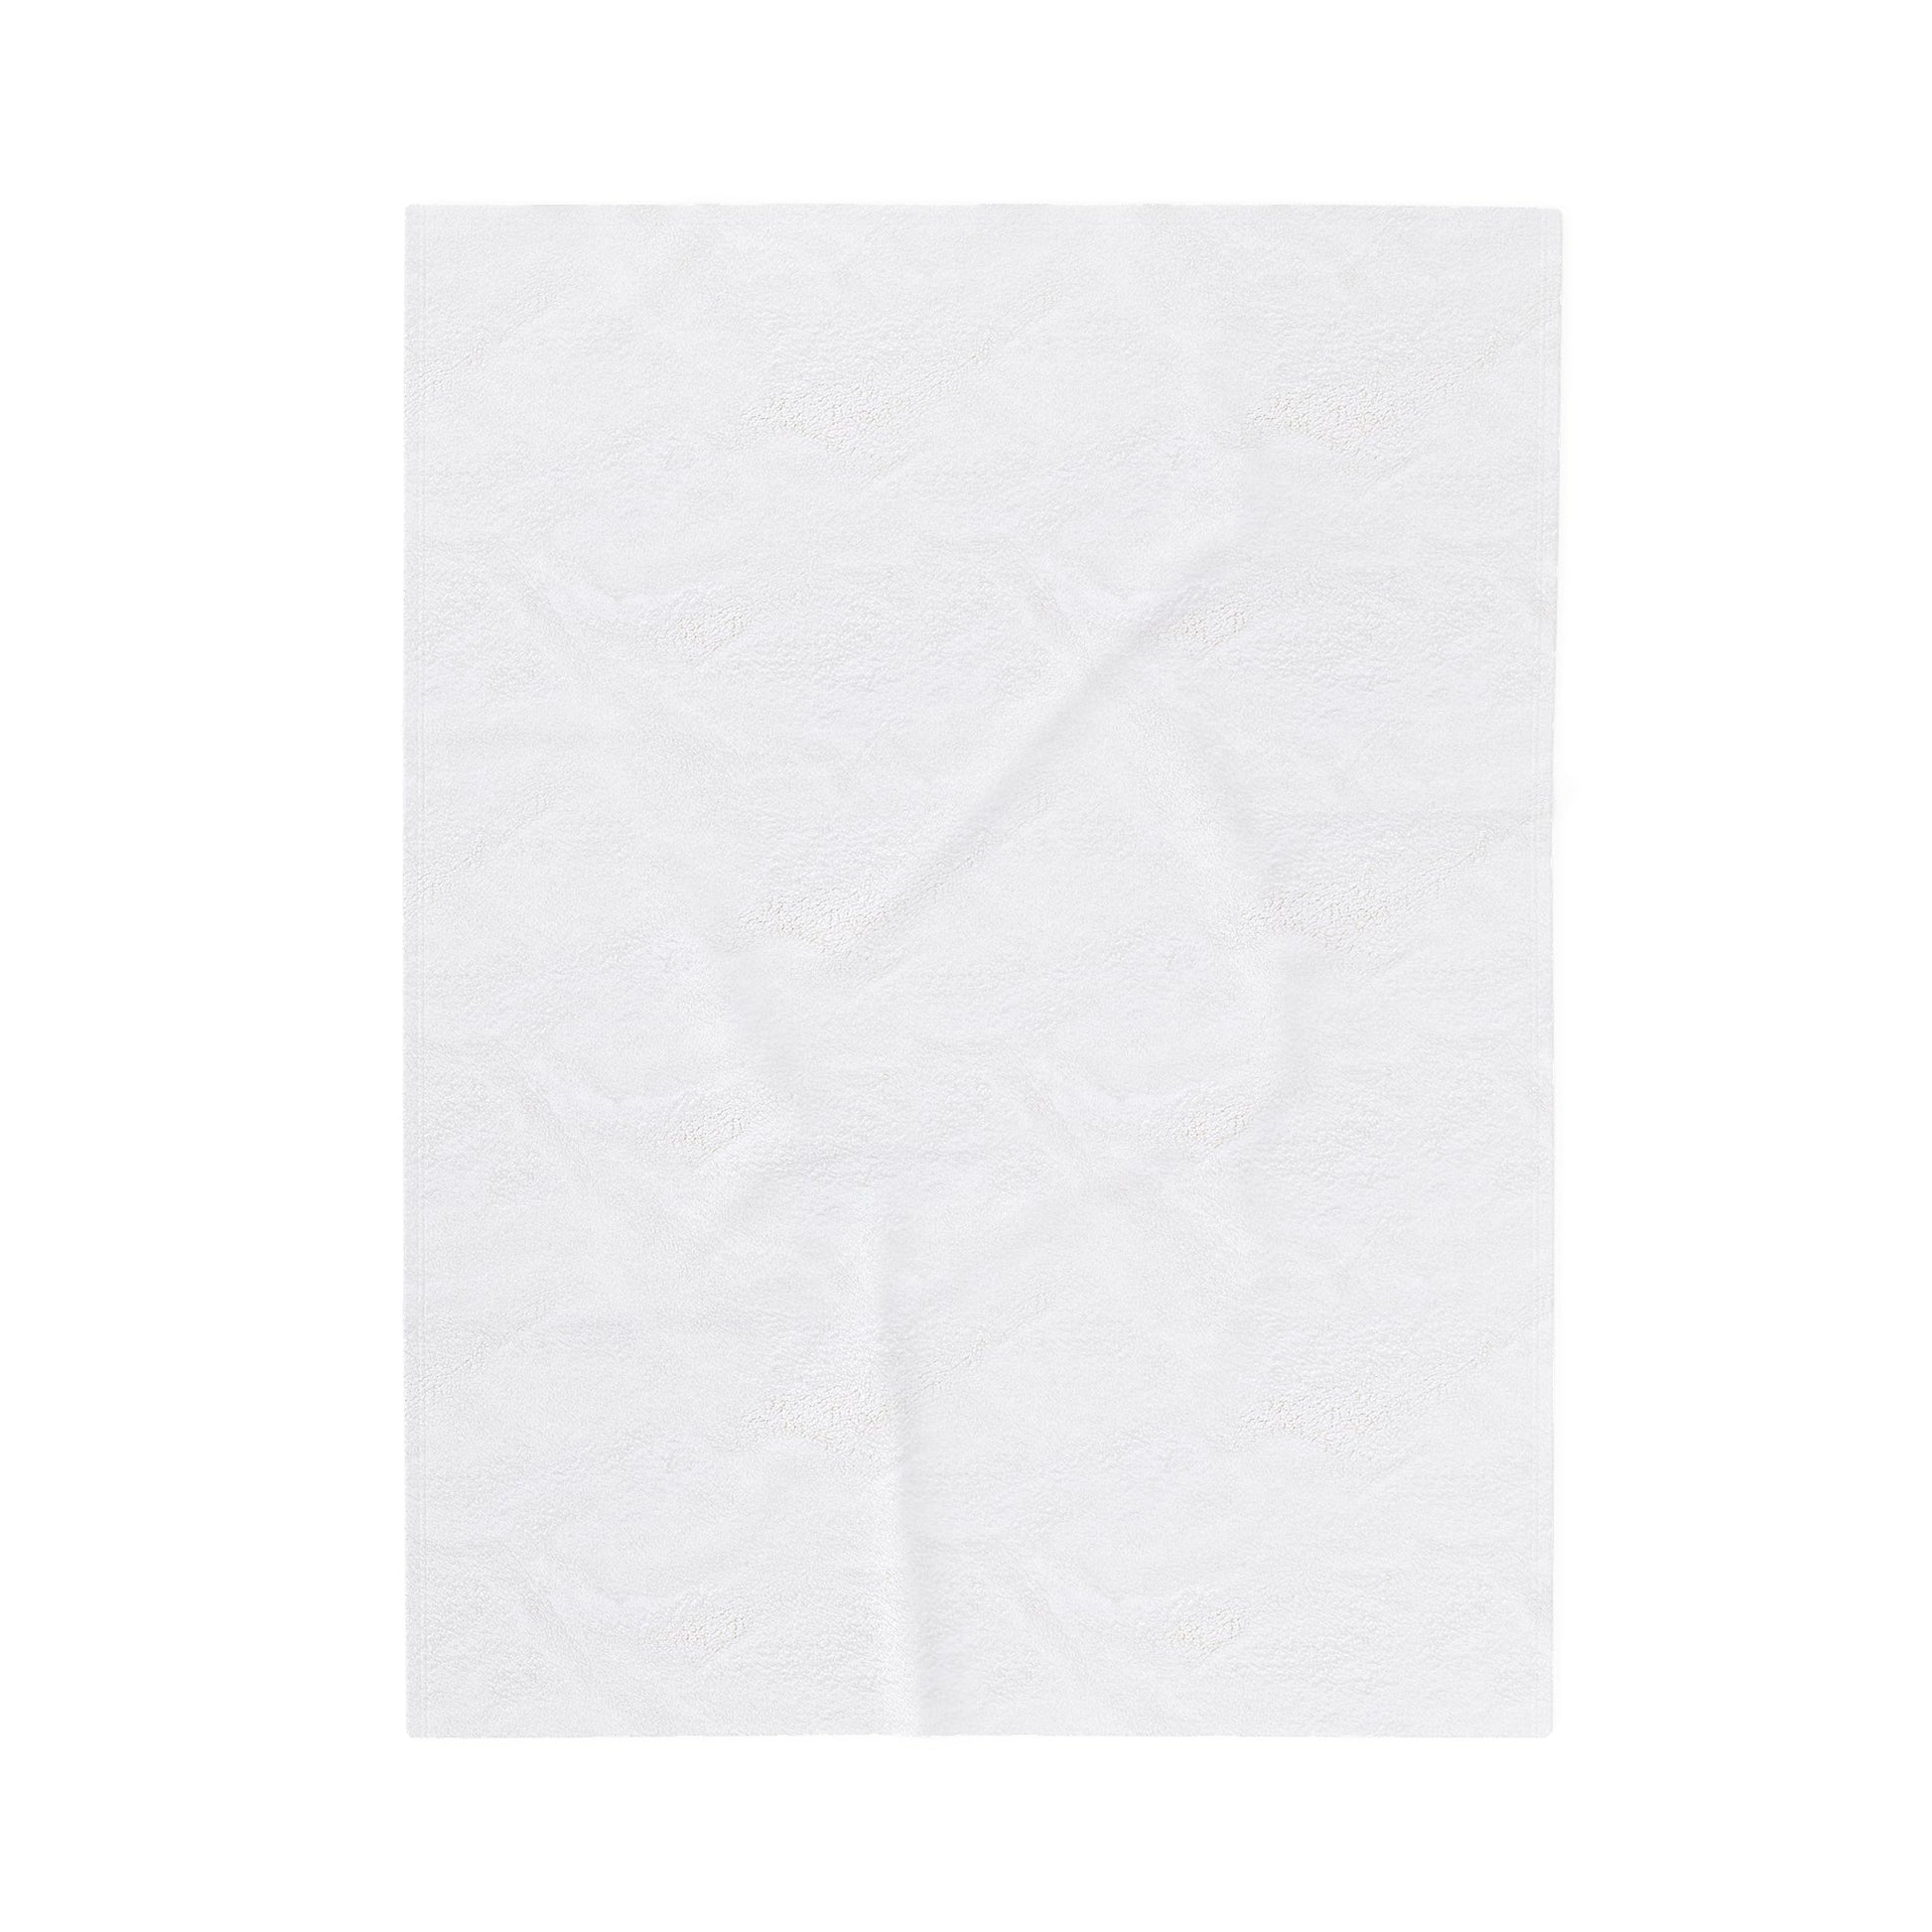 Mizuki Trace - Plush Blanket-All Over Prints-Mr.Zao - Krazy Art Gallery